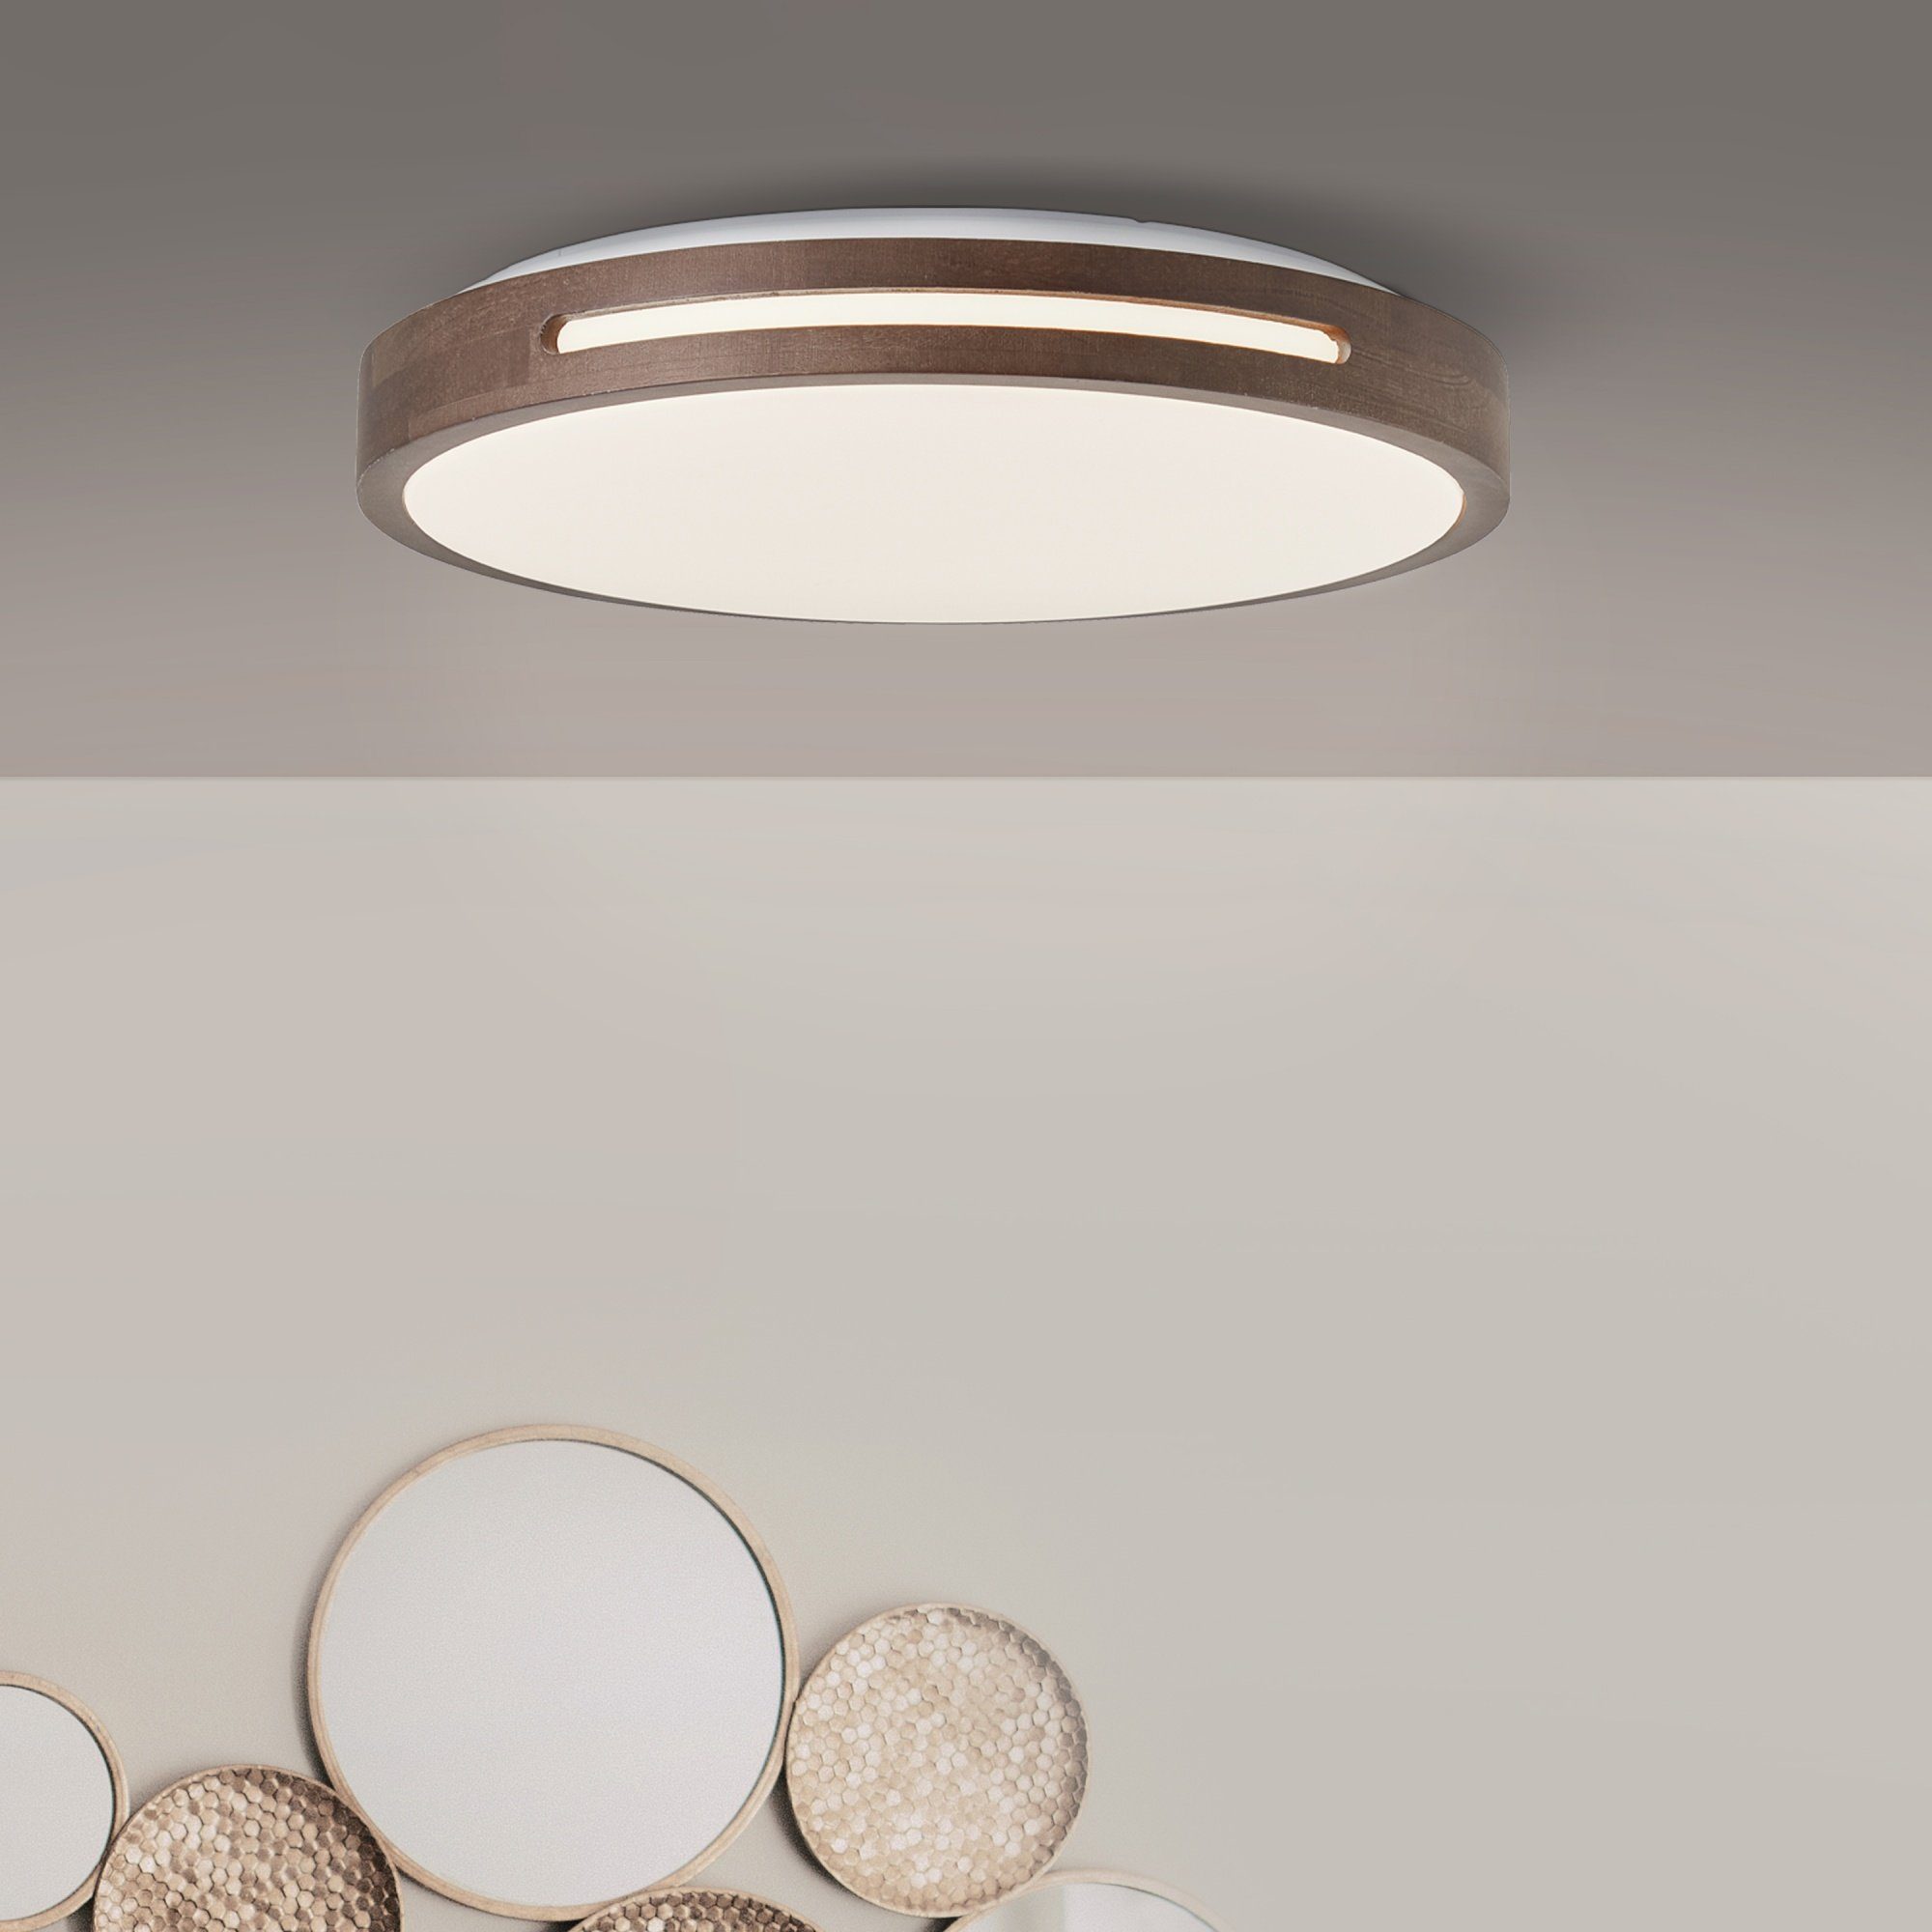 Lightbox LED Deckenleuchte, Dimmfunktion, LED fest integriert, Warmweiß, Ø 39 cm, 3 Stufen dimmbar, 2100 lm, 2700 K, Holz/Kunststoff/Metall